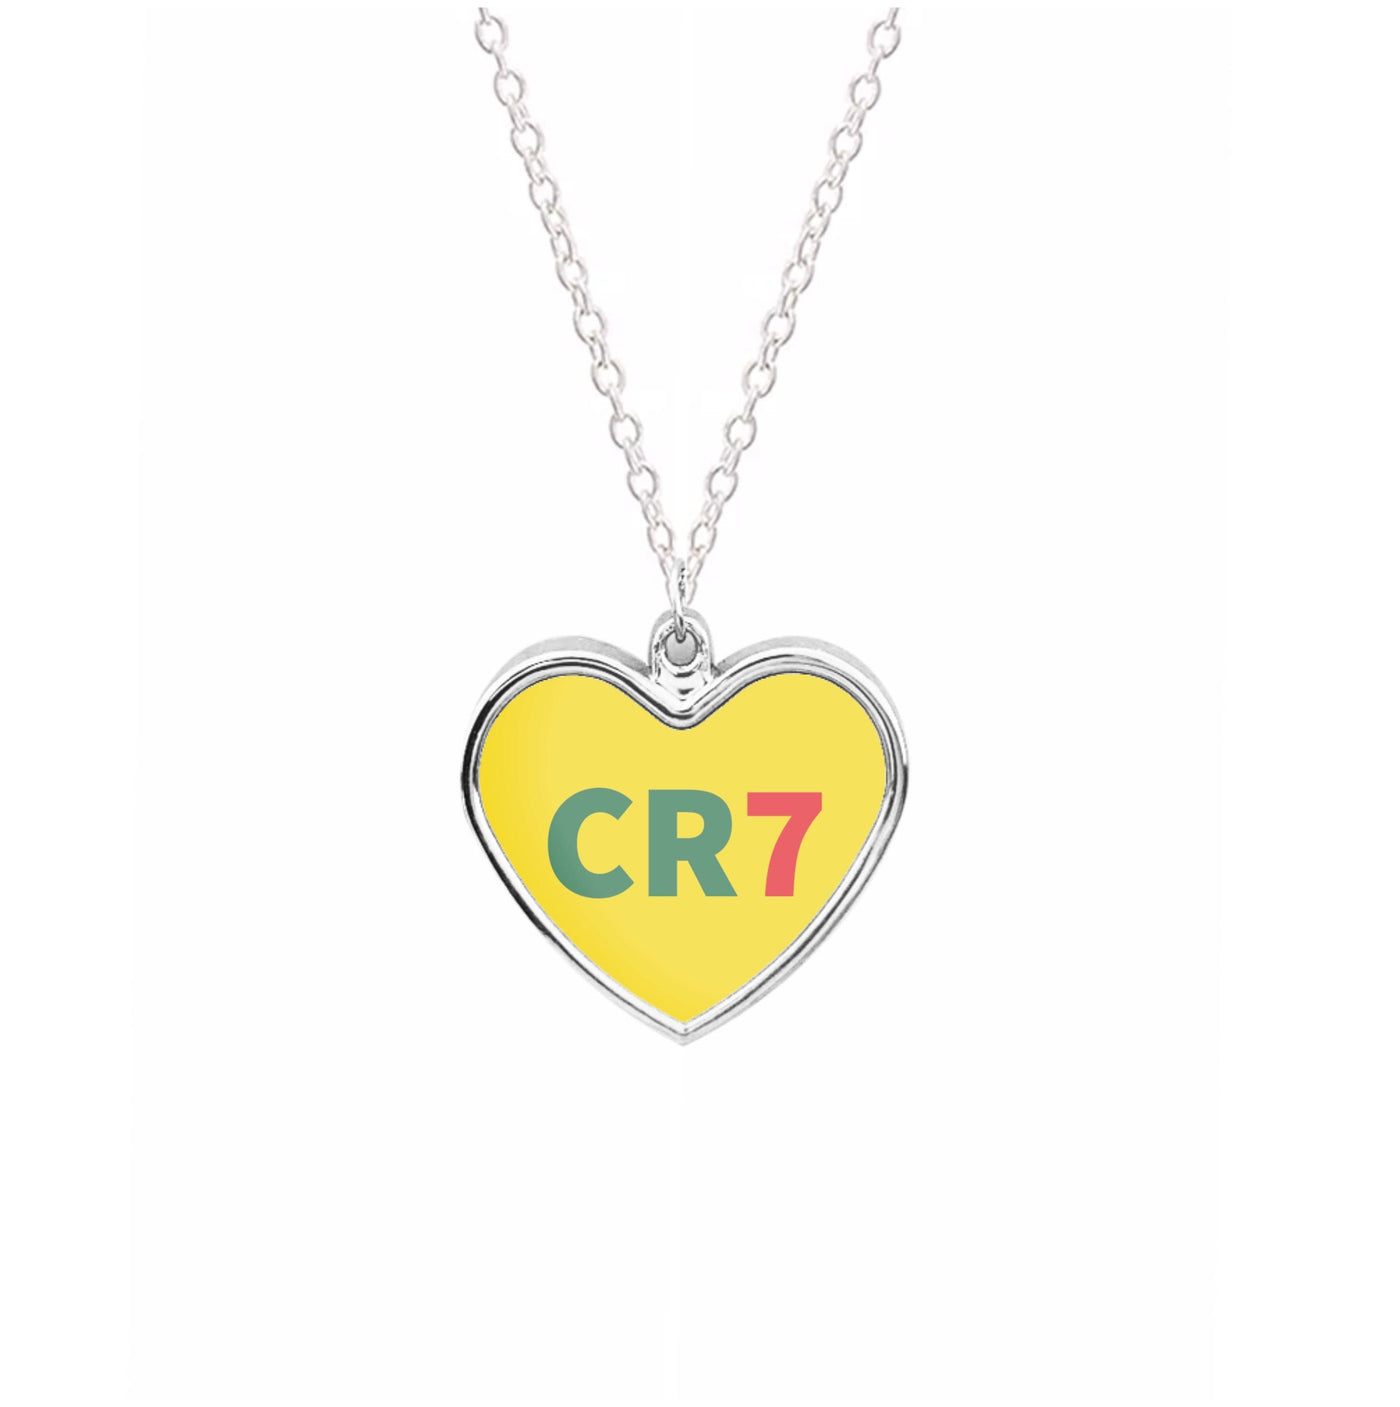 CR7 Logo - Ronaldo Necklace